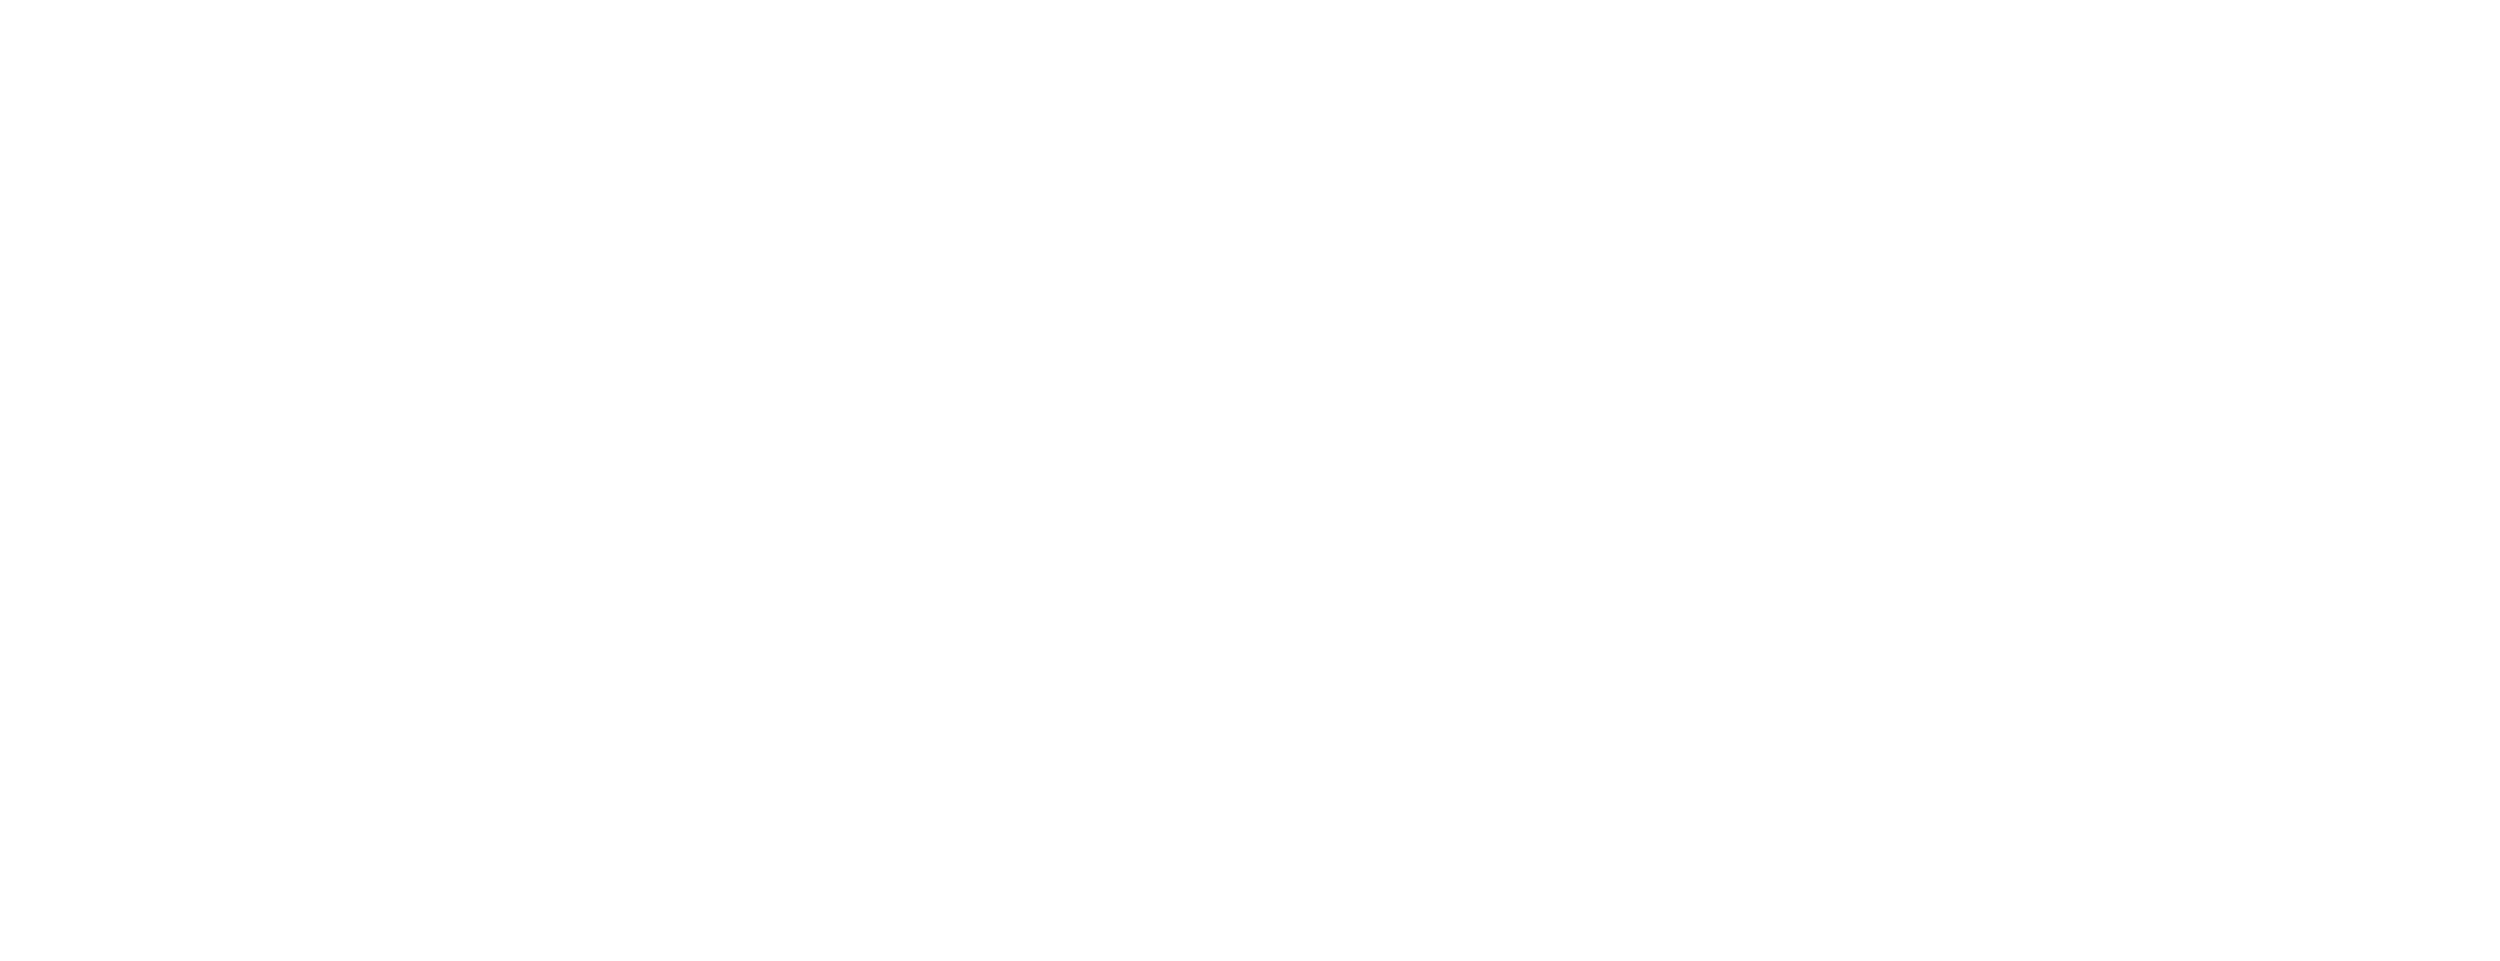 weems logo no background white copy